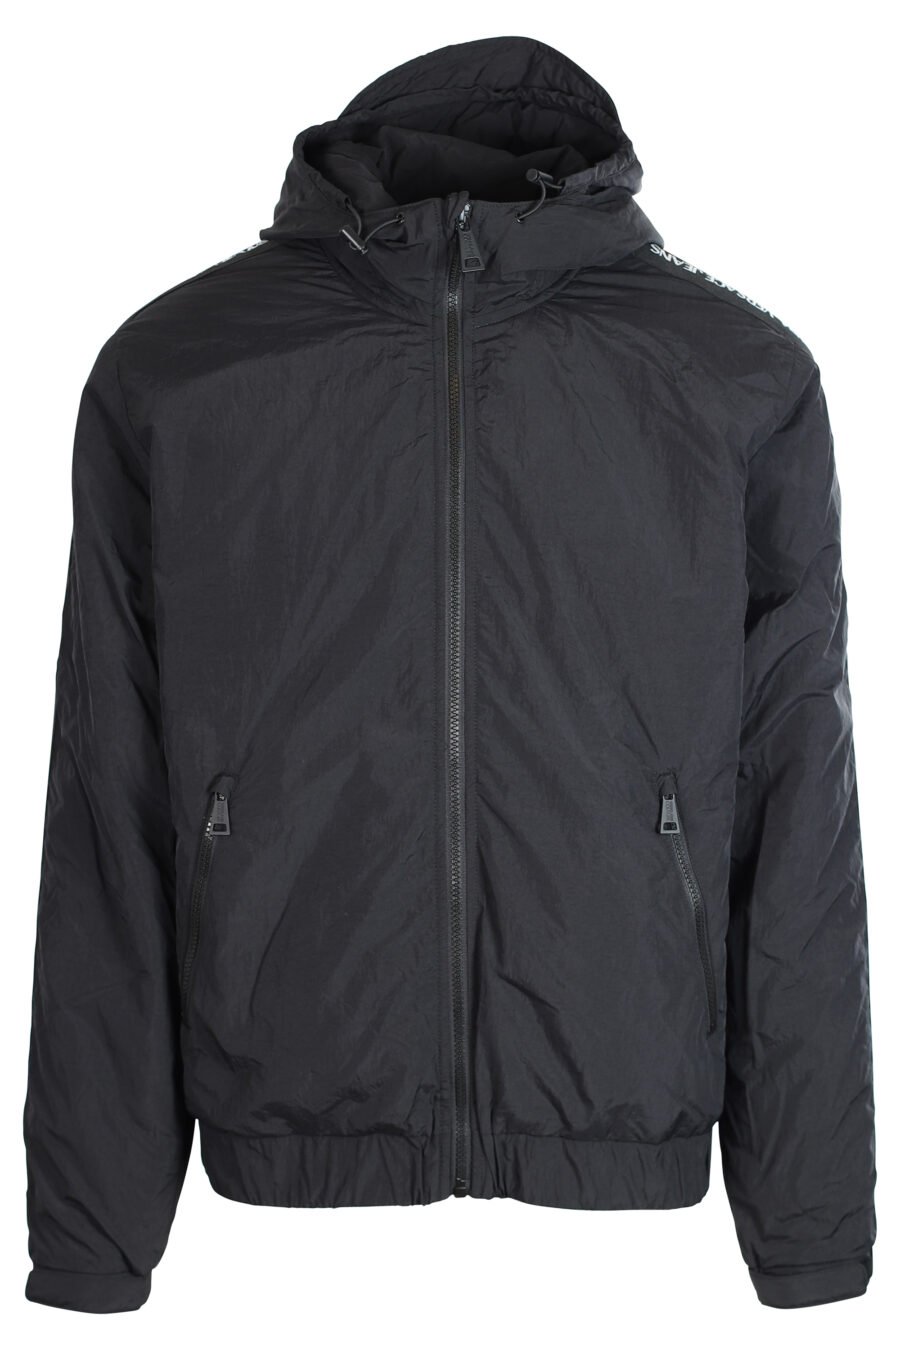 Black hooded jacket with logo tape sleeves - 8058987960710